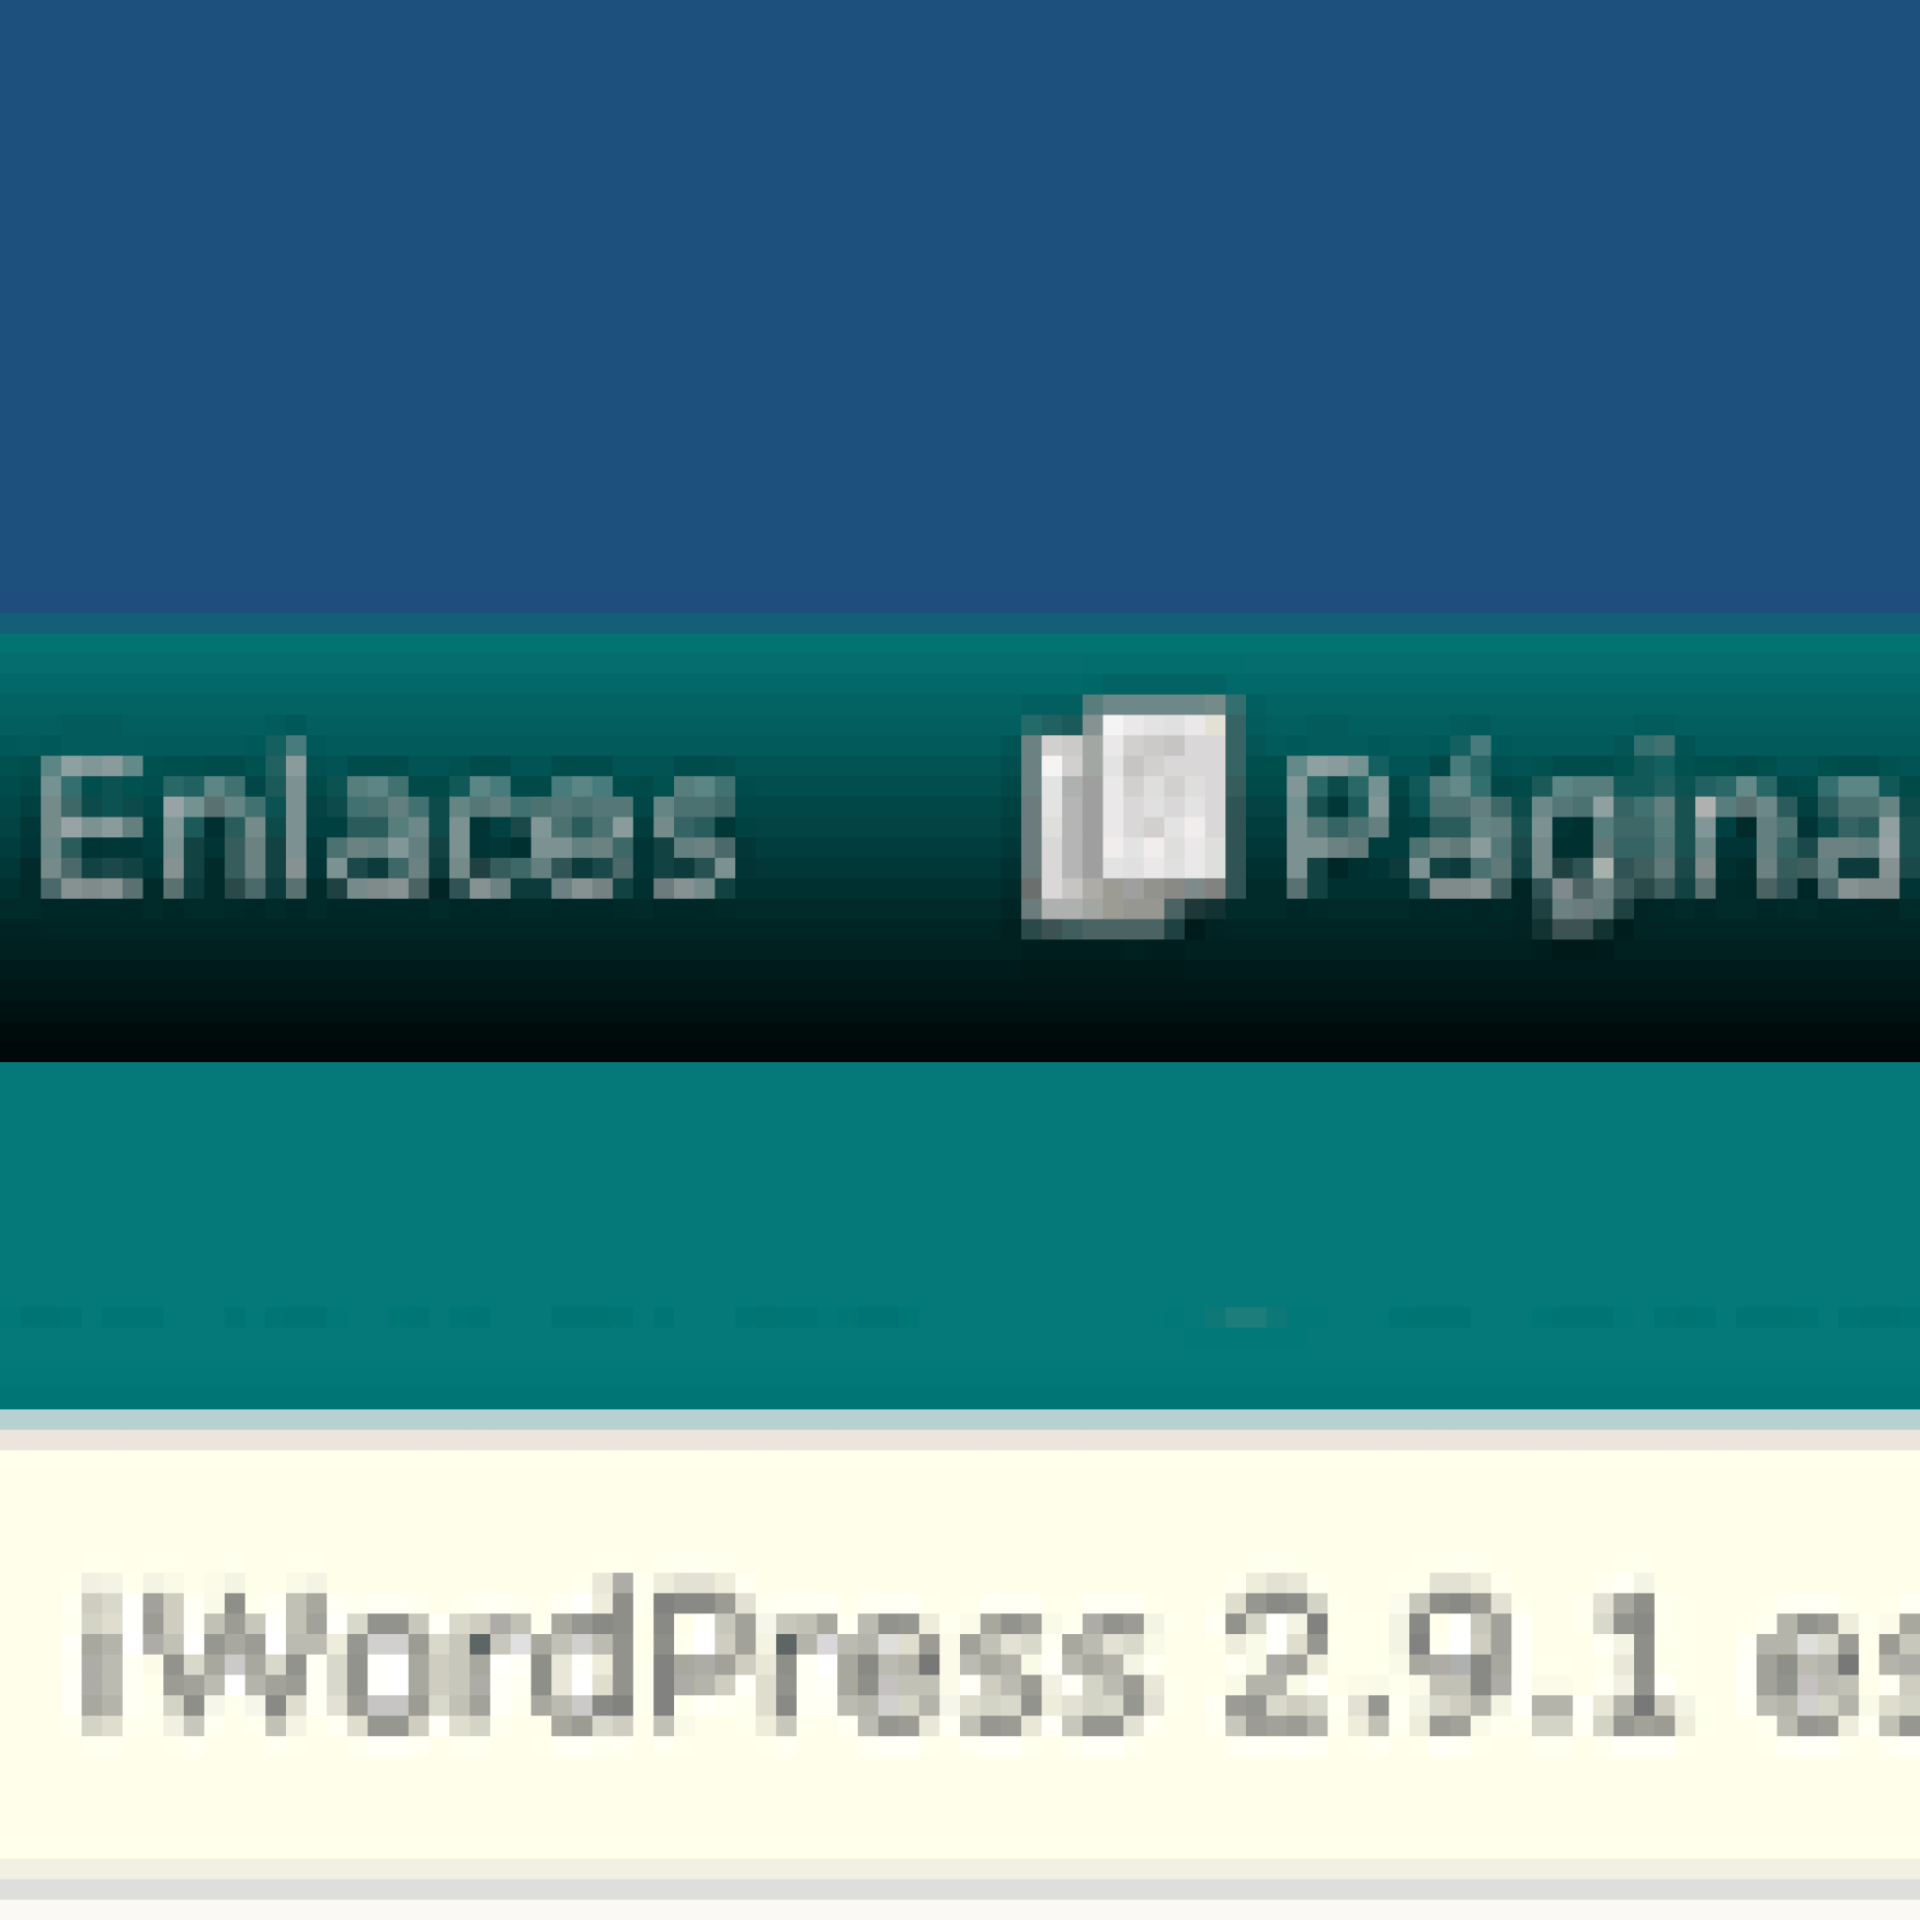 Wordpress 2.9.1: Actualizando&Hellip;